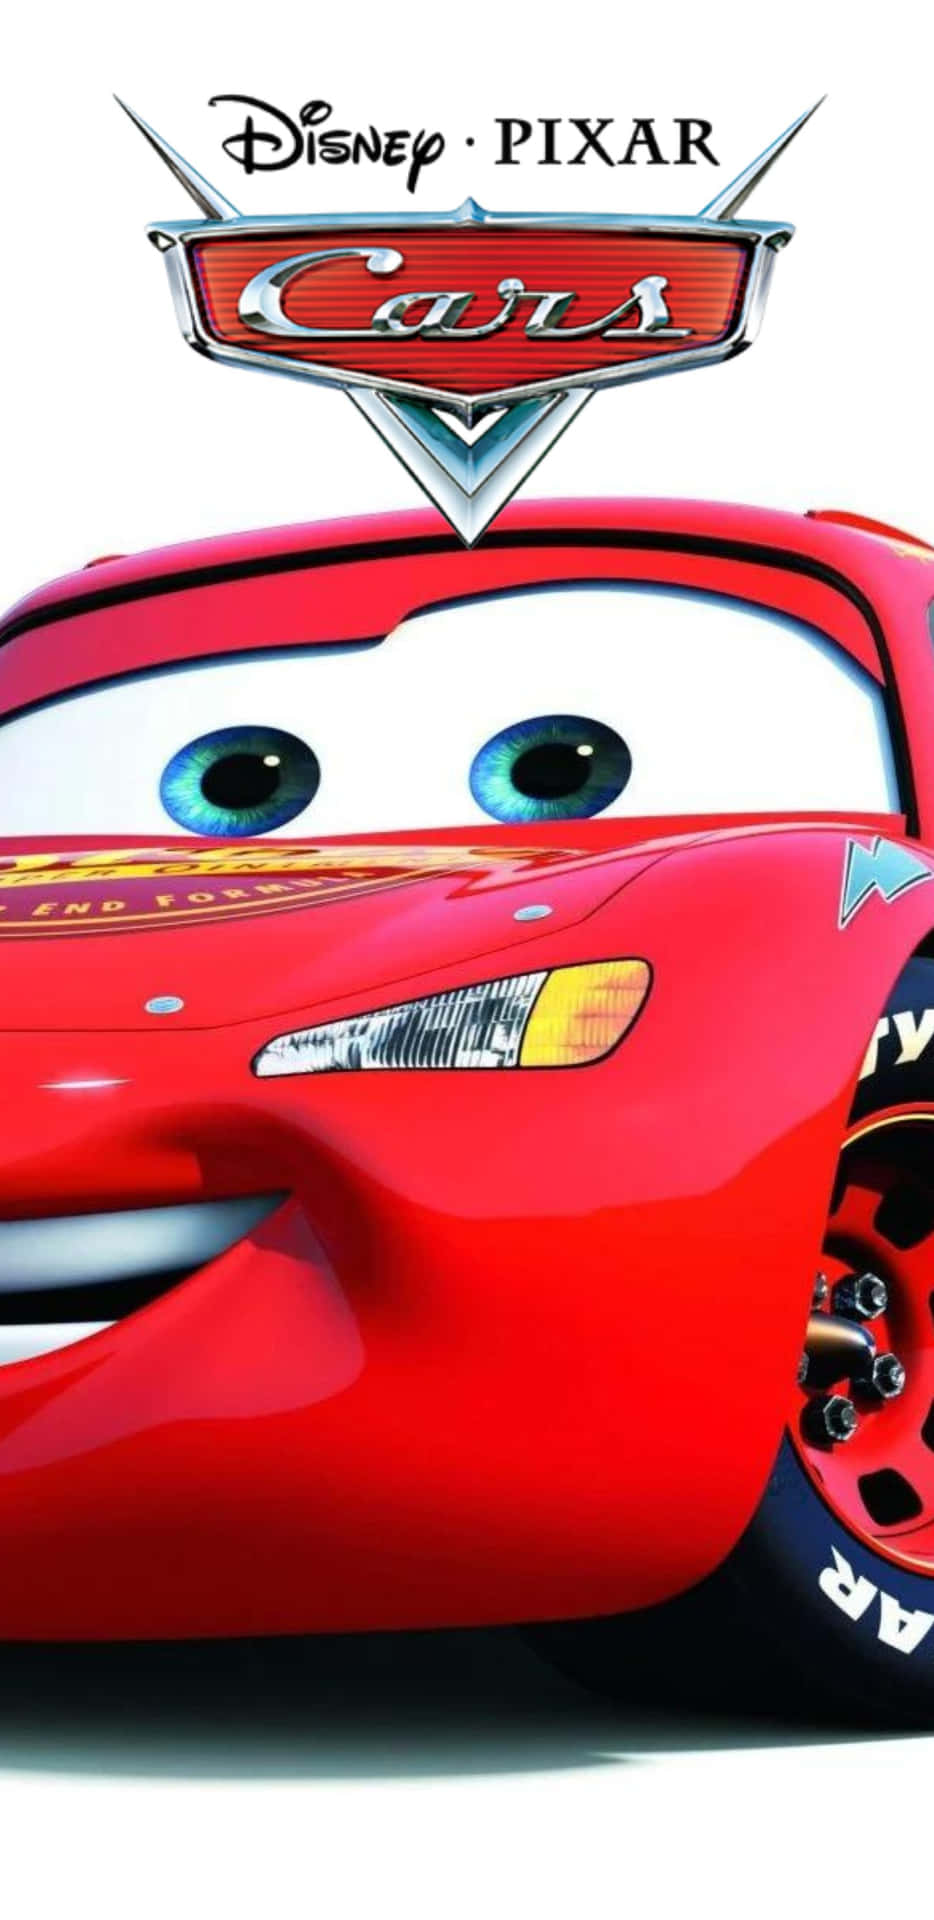 Disney Pixar Cars 3 - A Red Car With Big Eyes